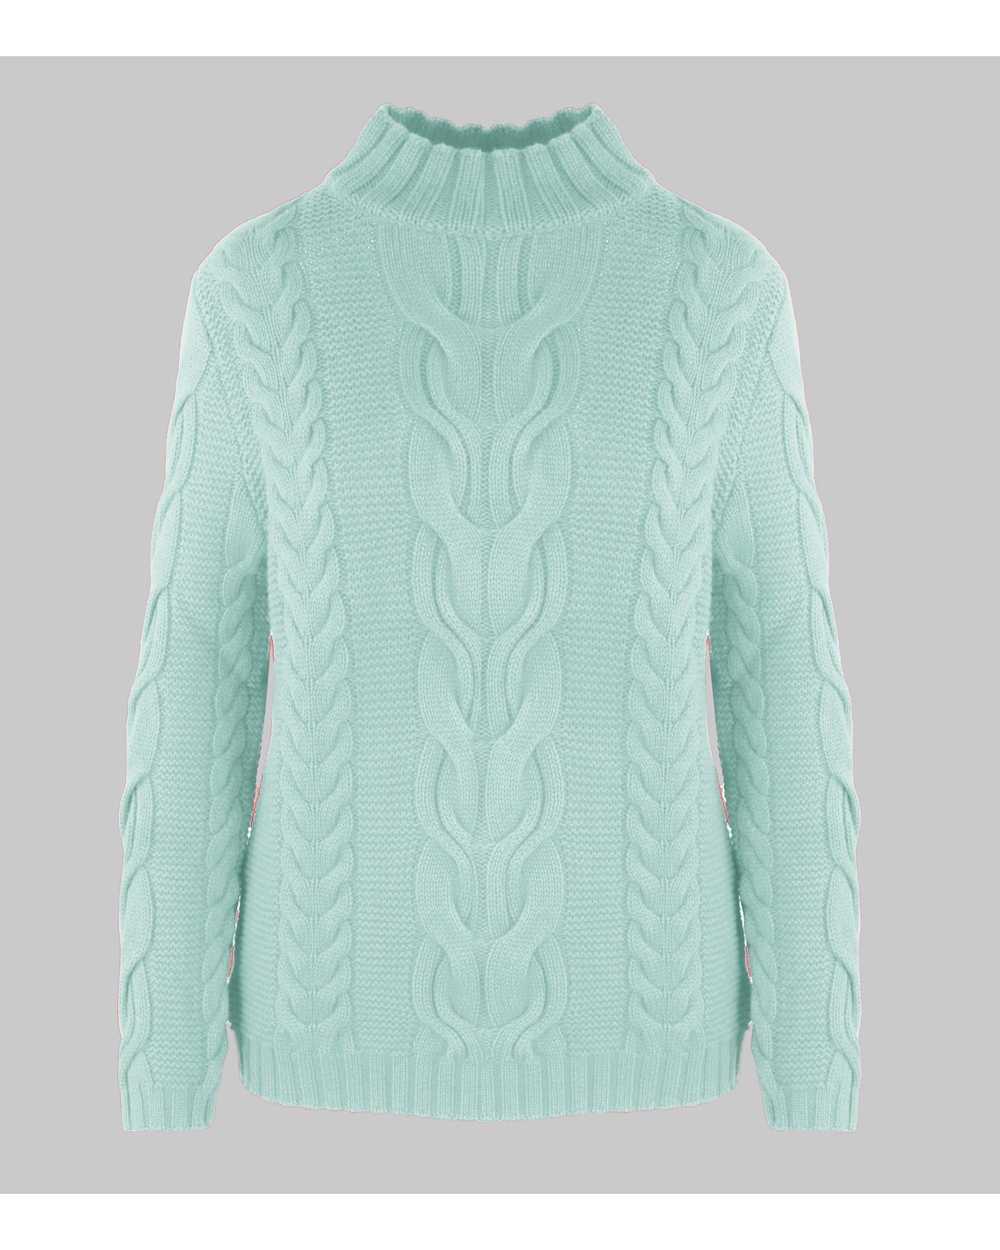 Malo Cashmere Wool Turtleneck Sweater - image 1